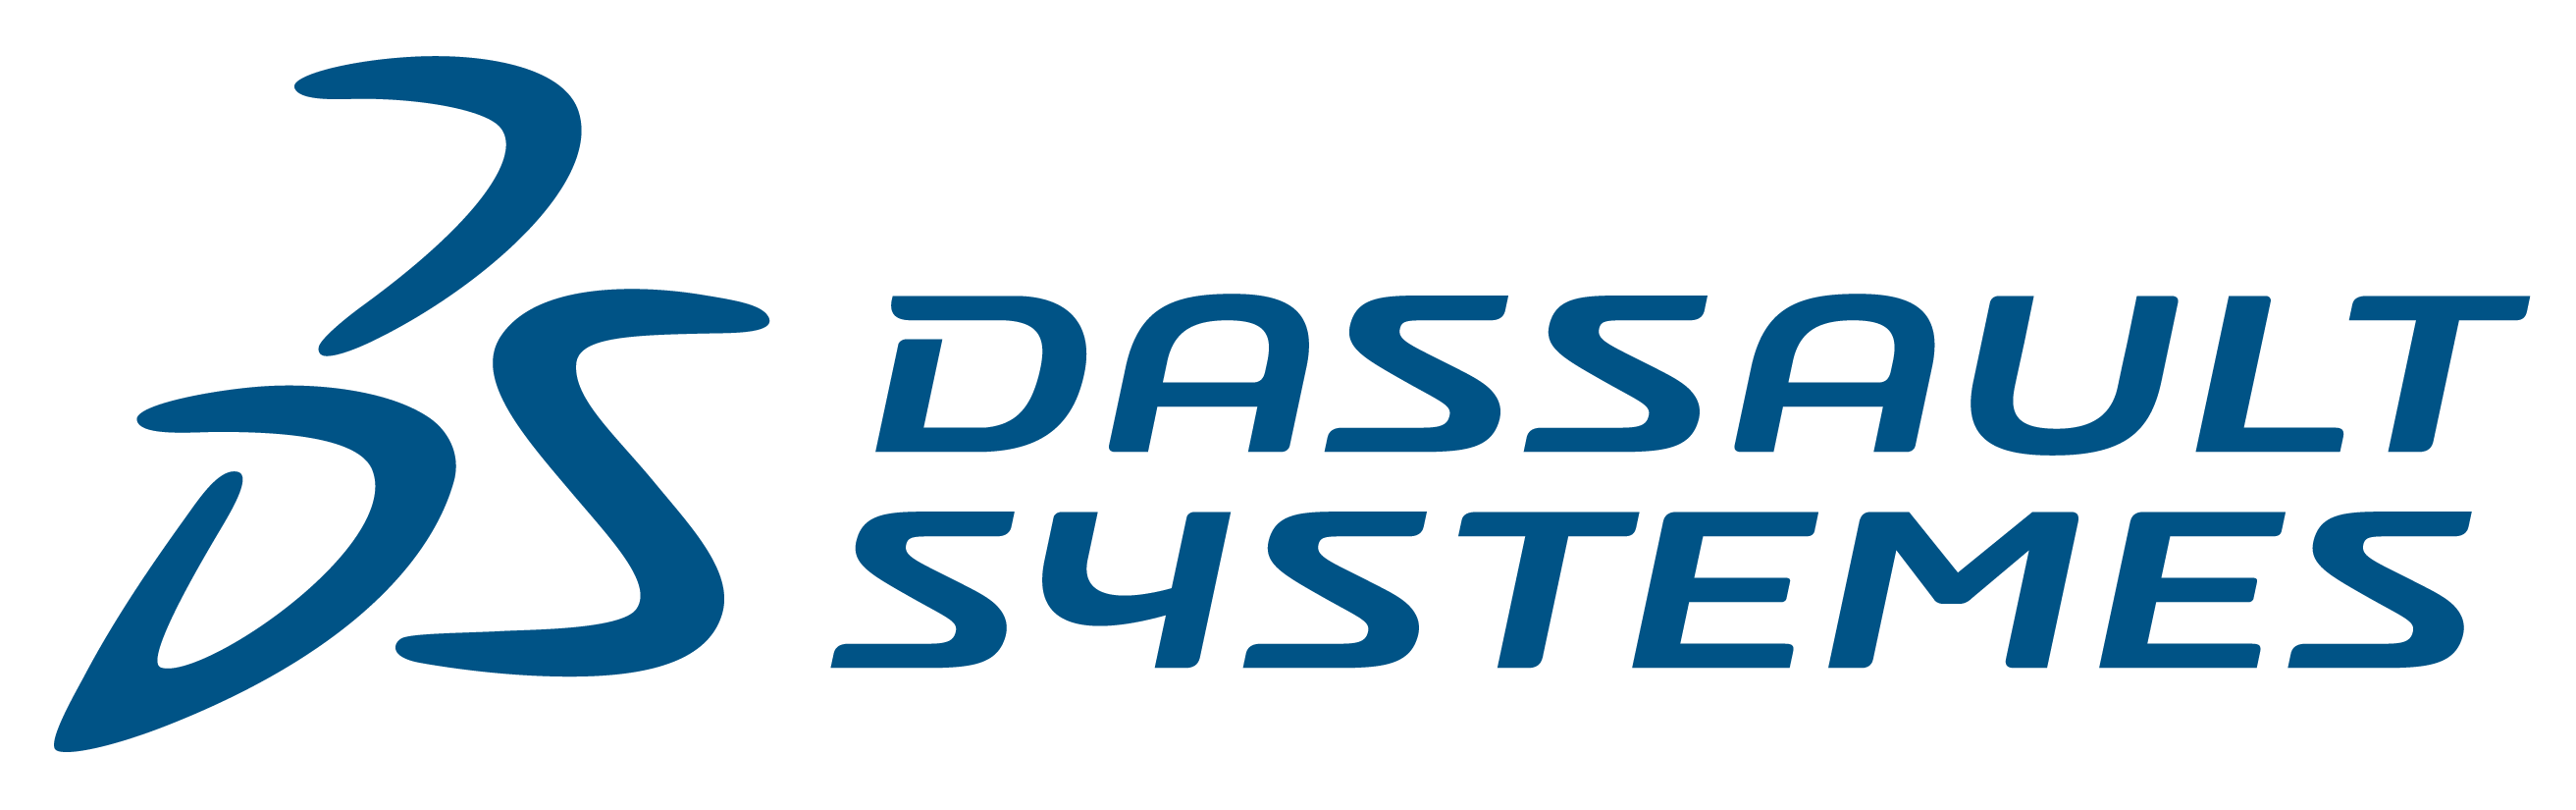 dassault systèmes logo